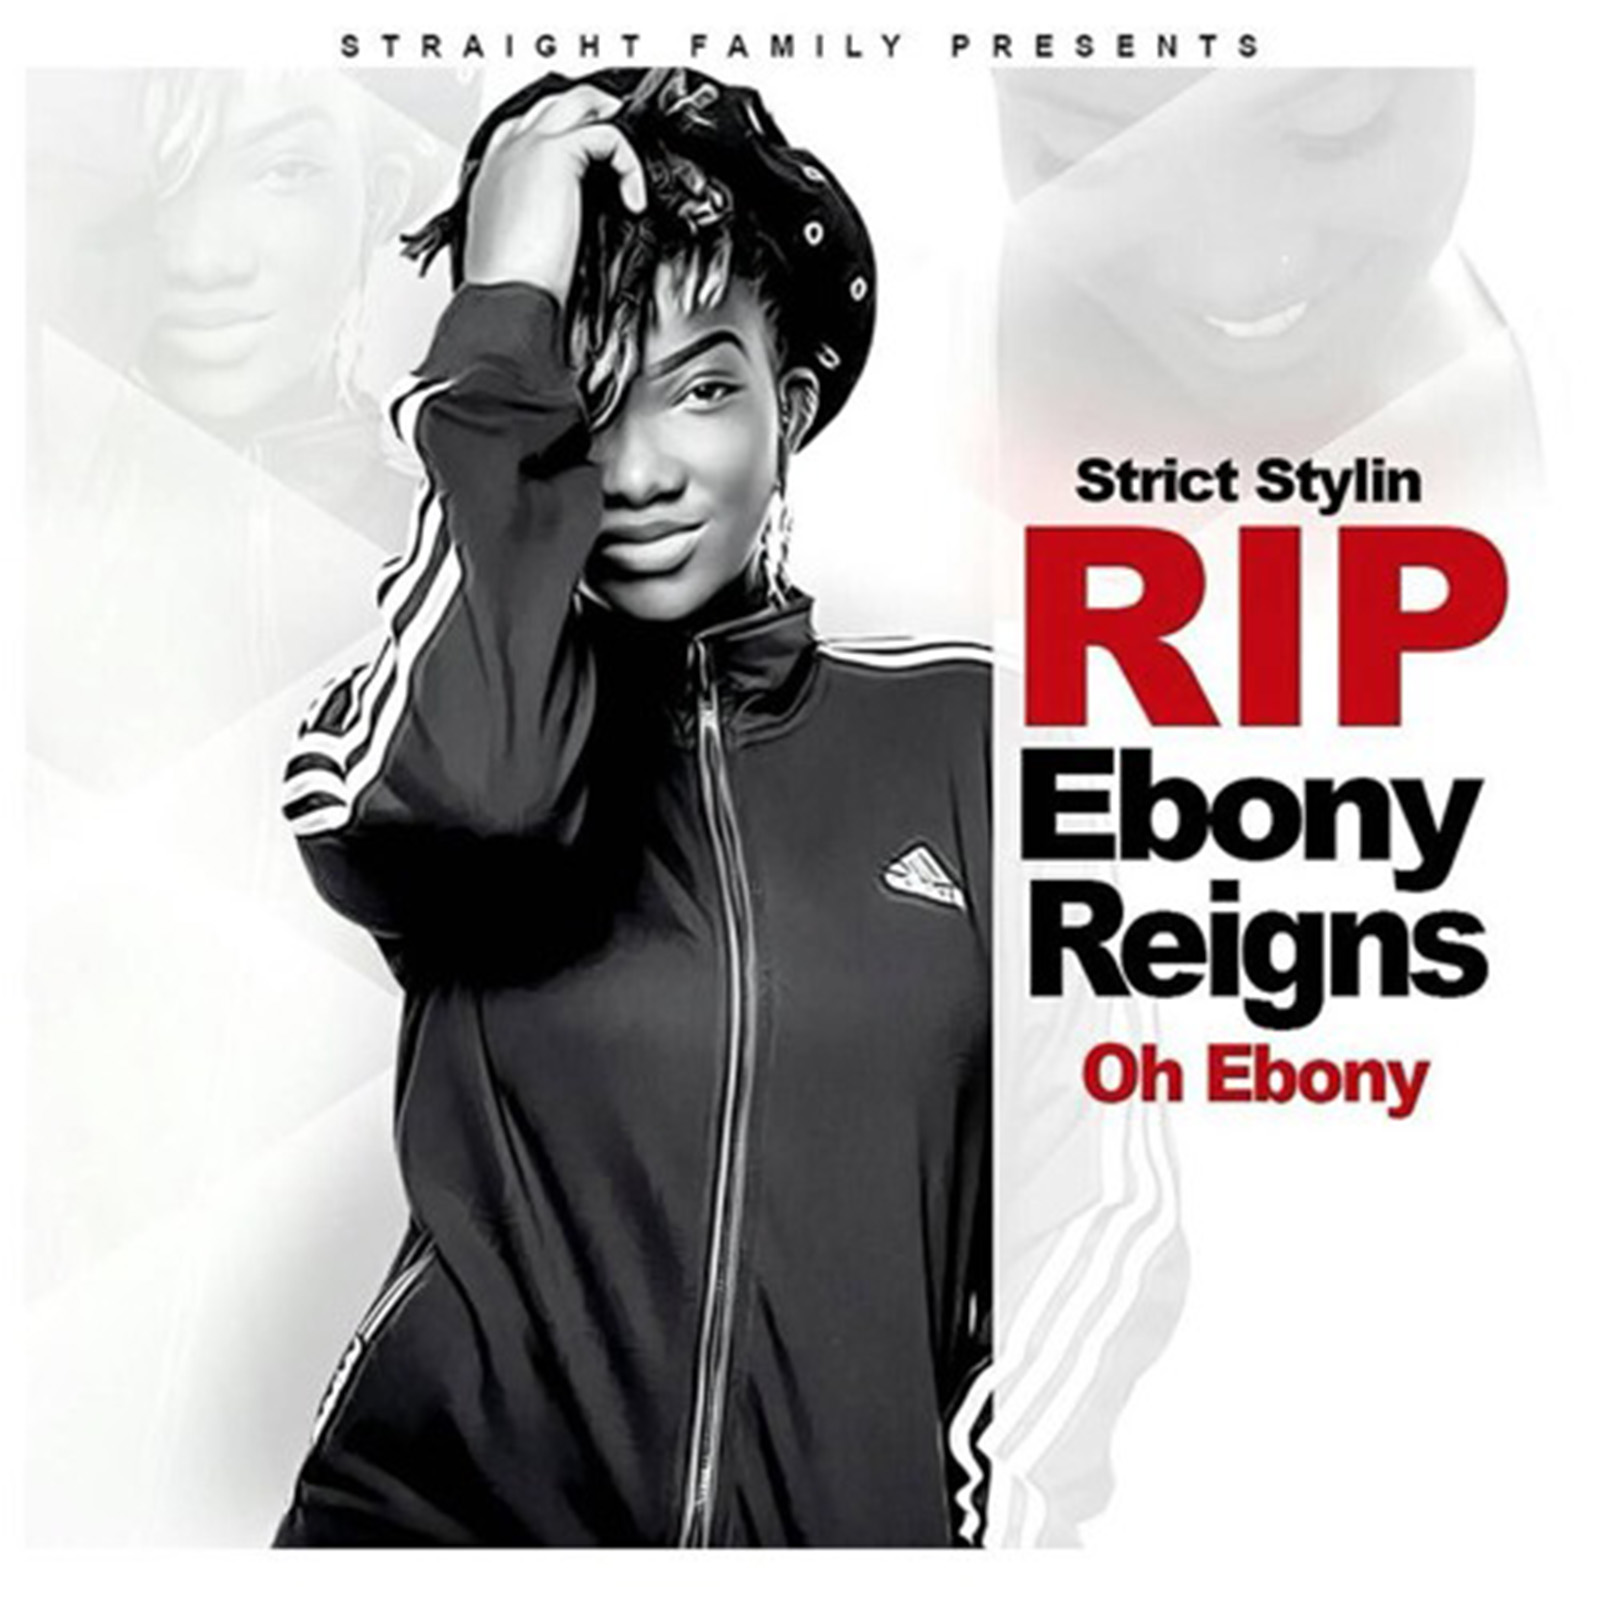 Oh Ebony R.I.P by Strict Stylin